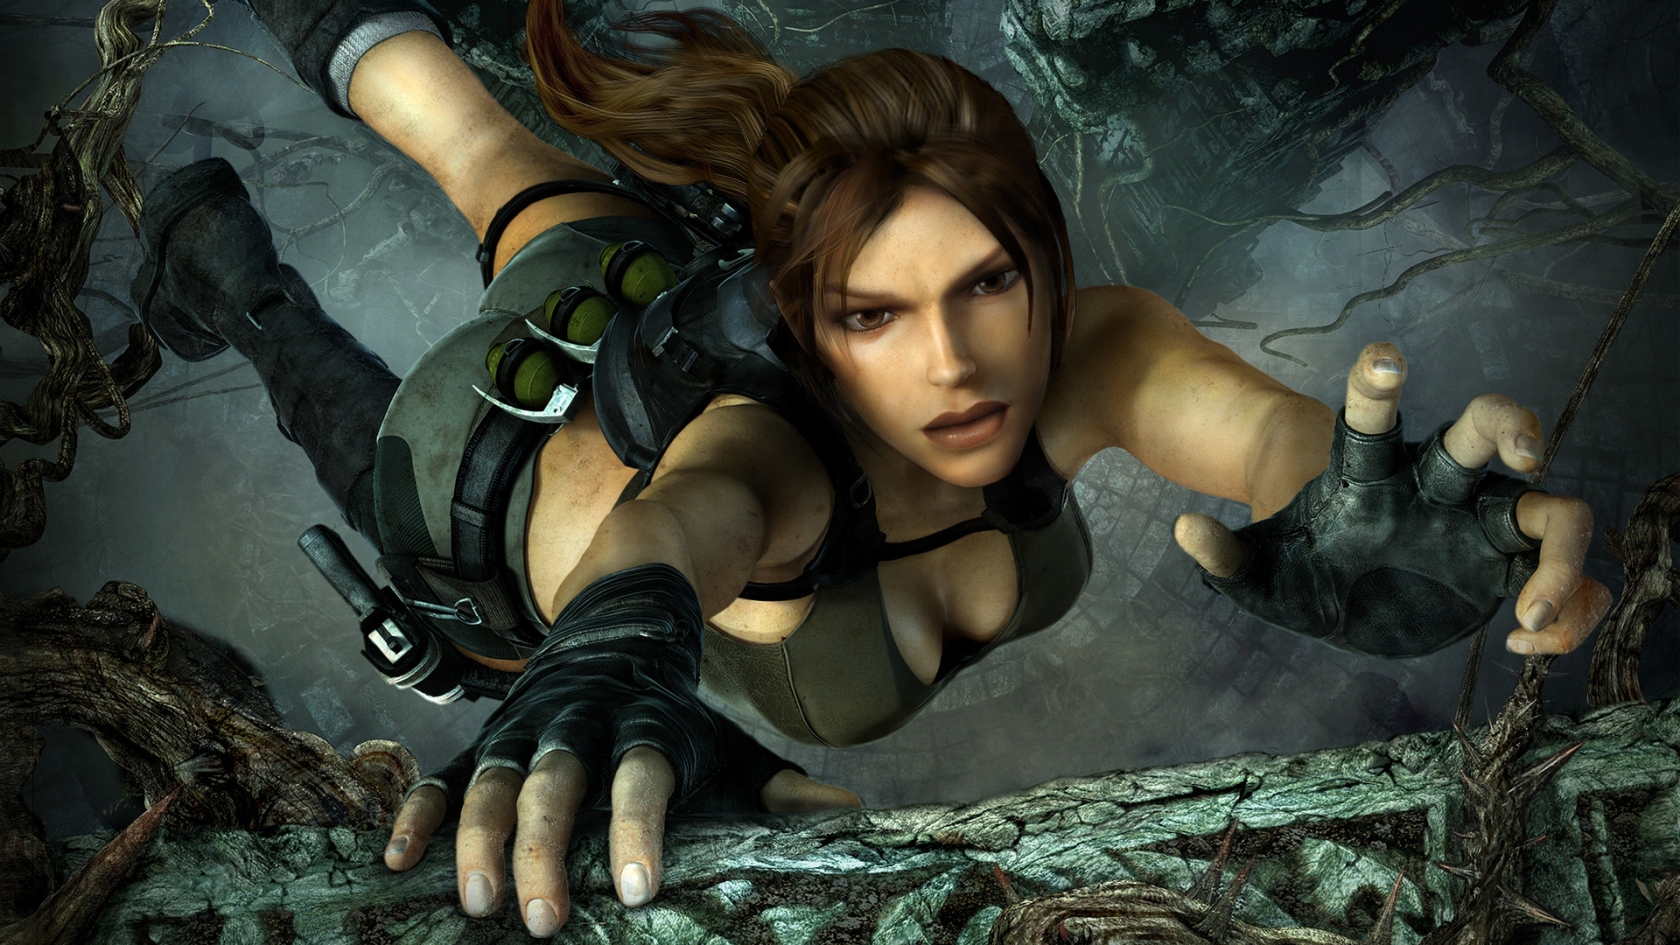 Lara Croft On The Edge for 1680 x 945 HDTV resolution